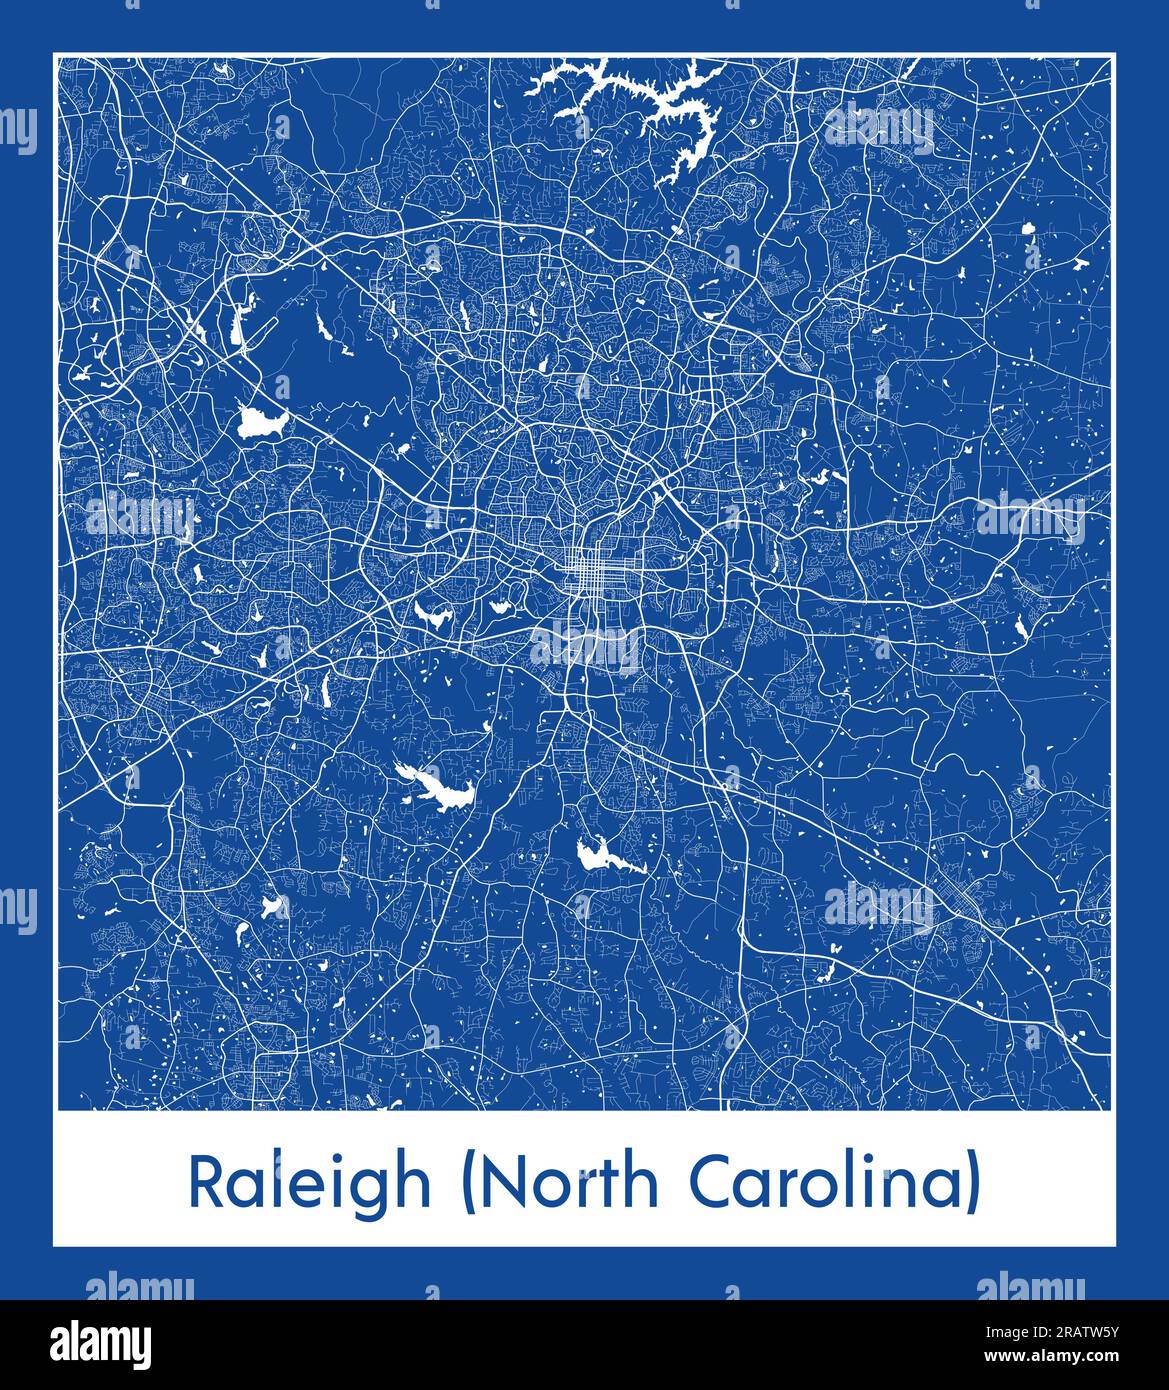 Raleigh North Carolina United States North America City map blue print vector illustration Stock Vector